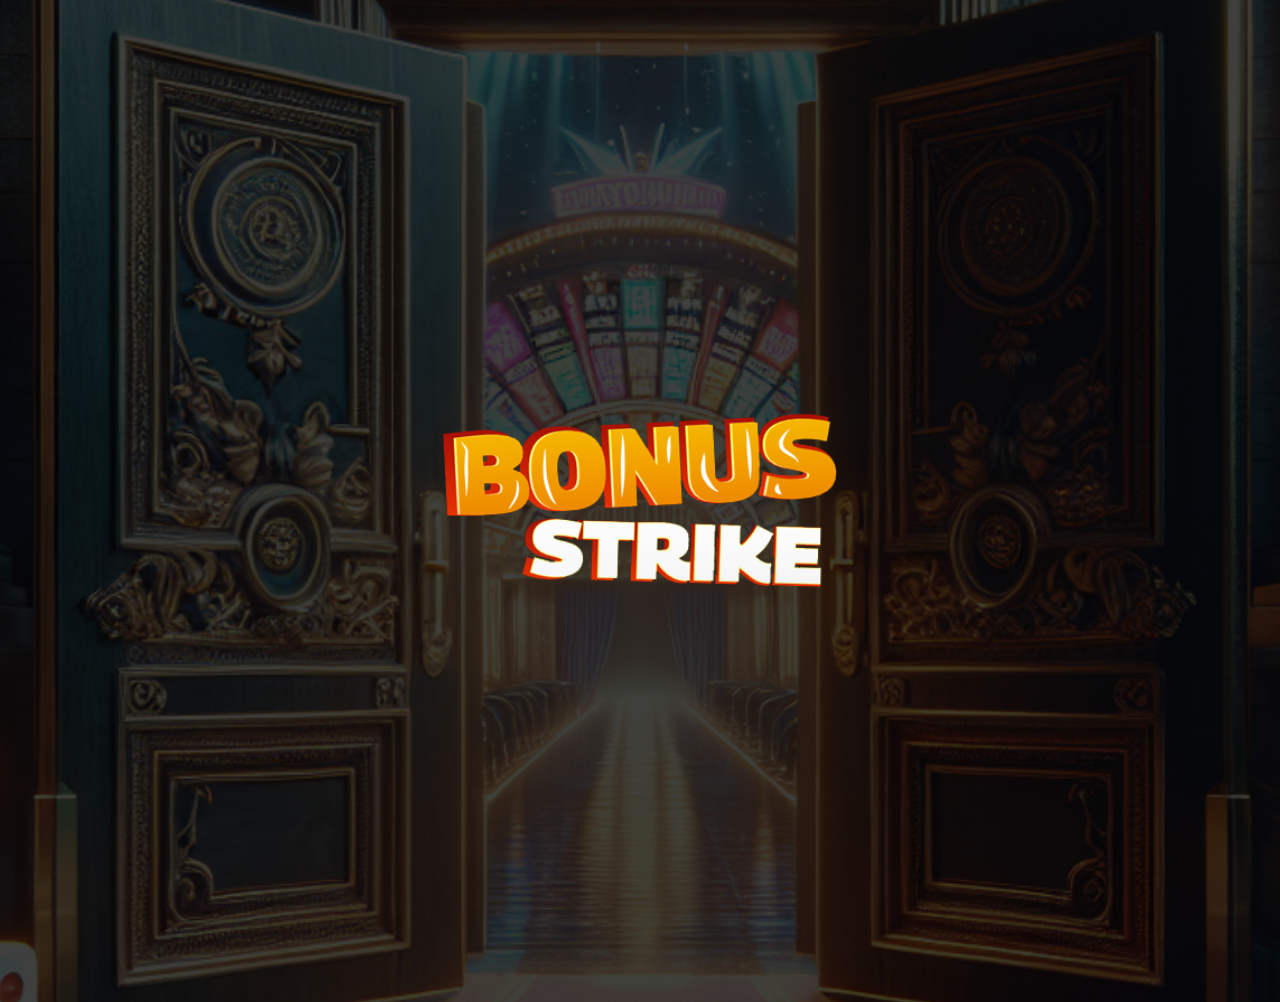 Bonus Strike Casino Sister Sites